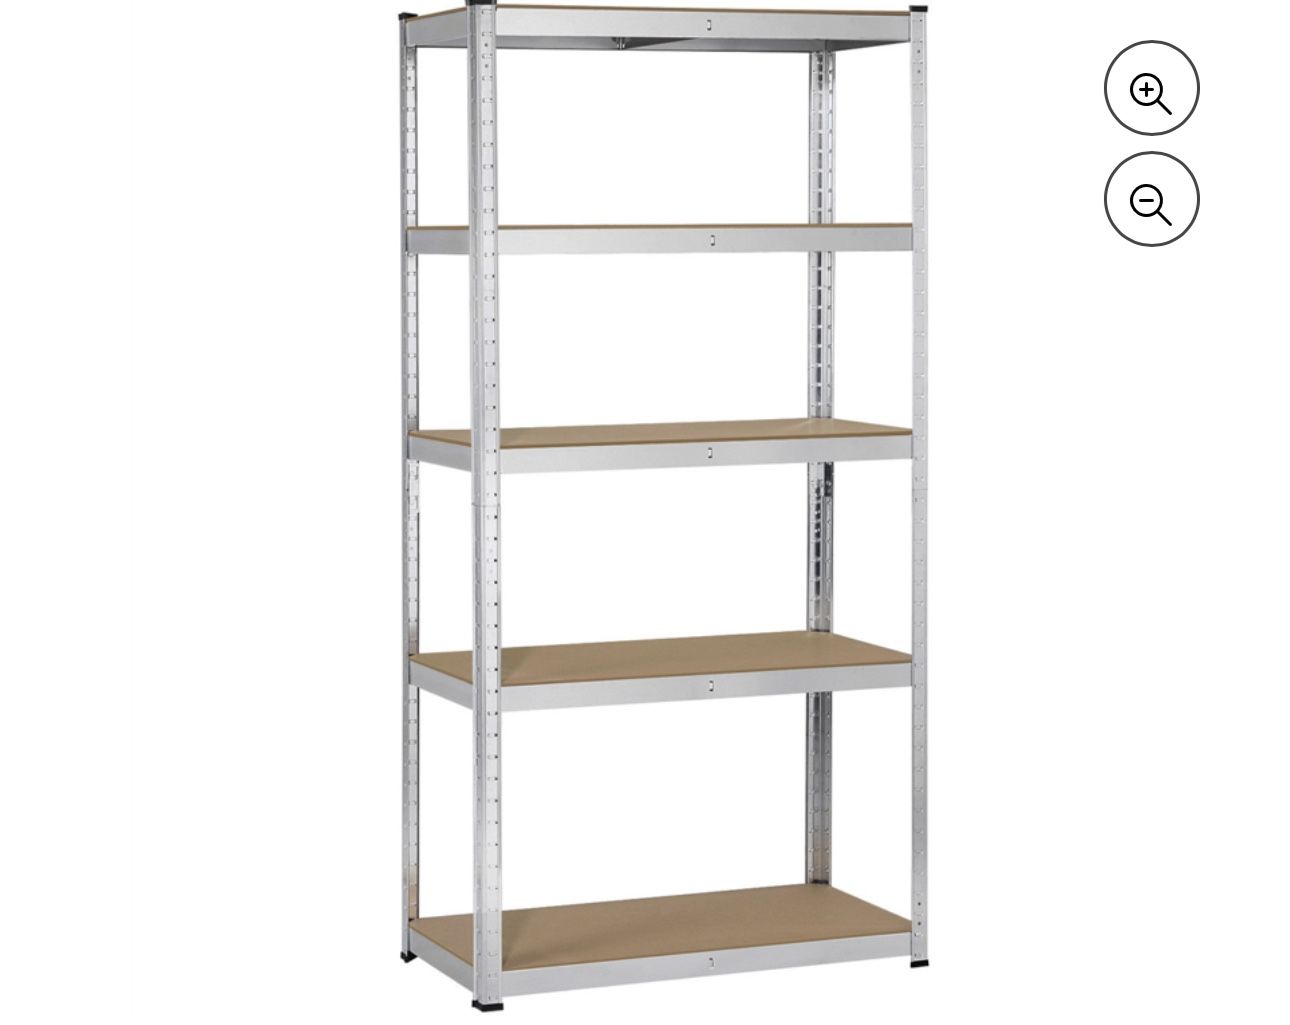 71in 5-Tier Adjustable Storage Shelf 386LB Capacity,L 35.5'' x W 16'' x H 71'', Silver 613714 